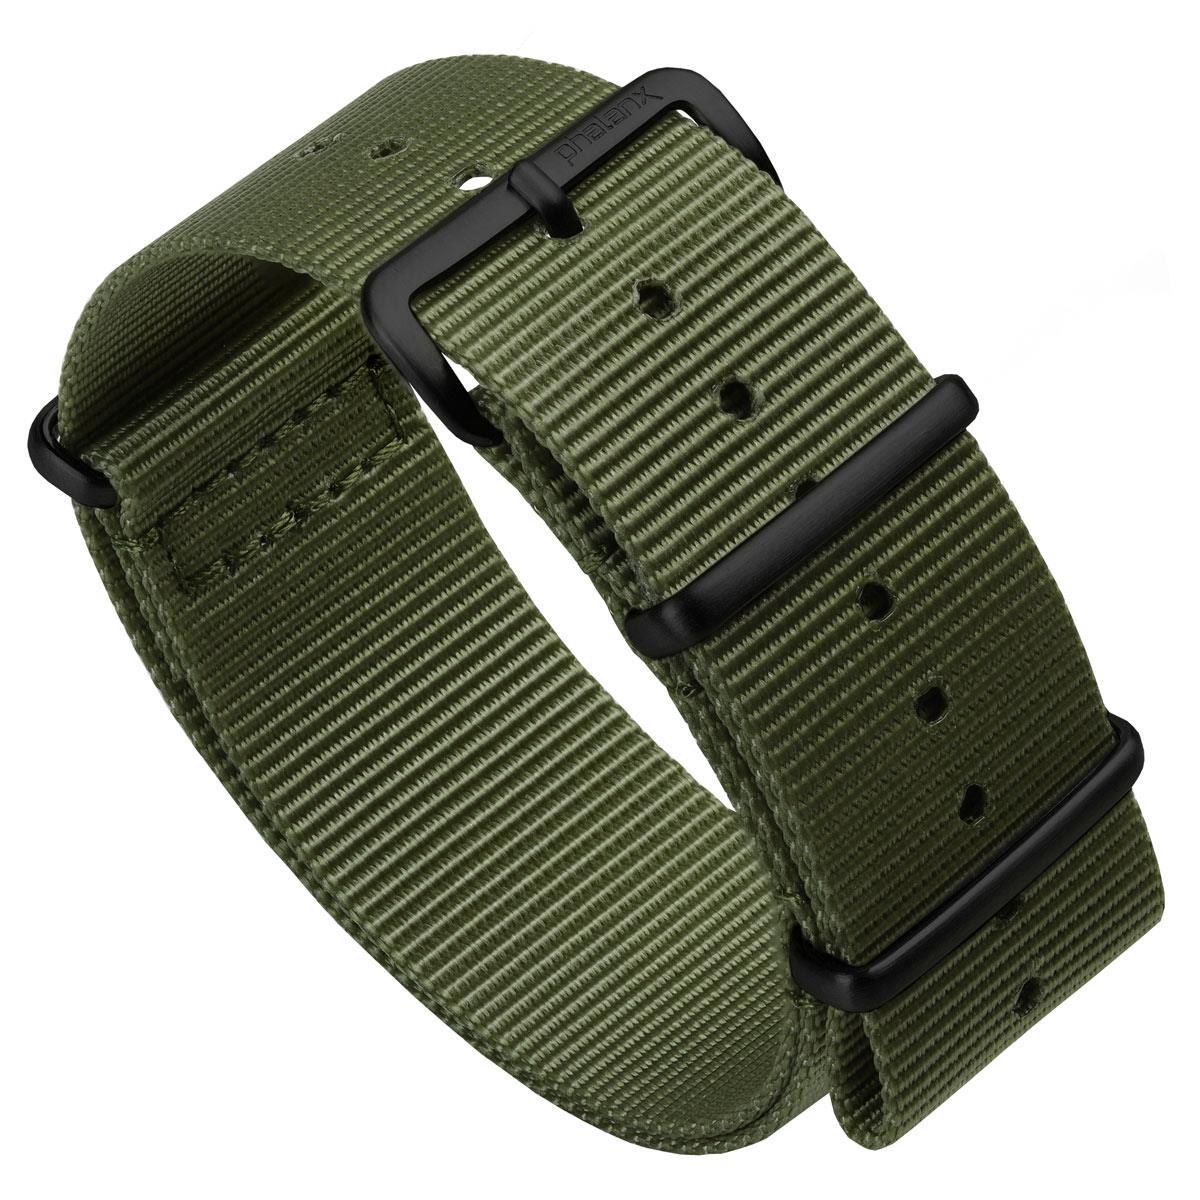 Phalanx Nylon Military Watch Strap - Army Green - IP Black Hardware